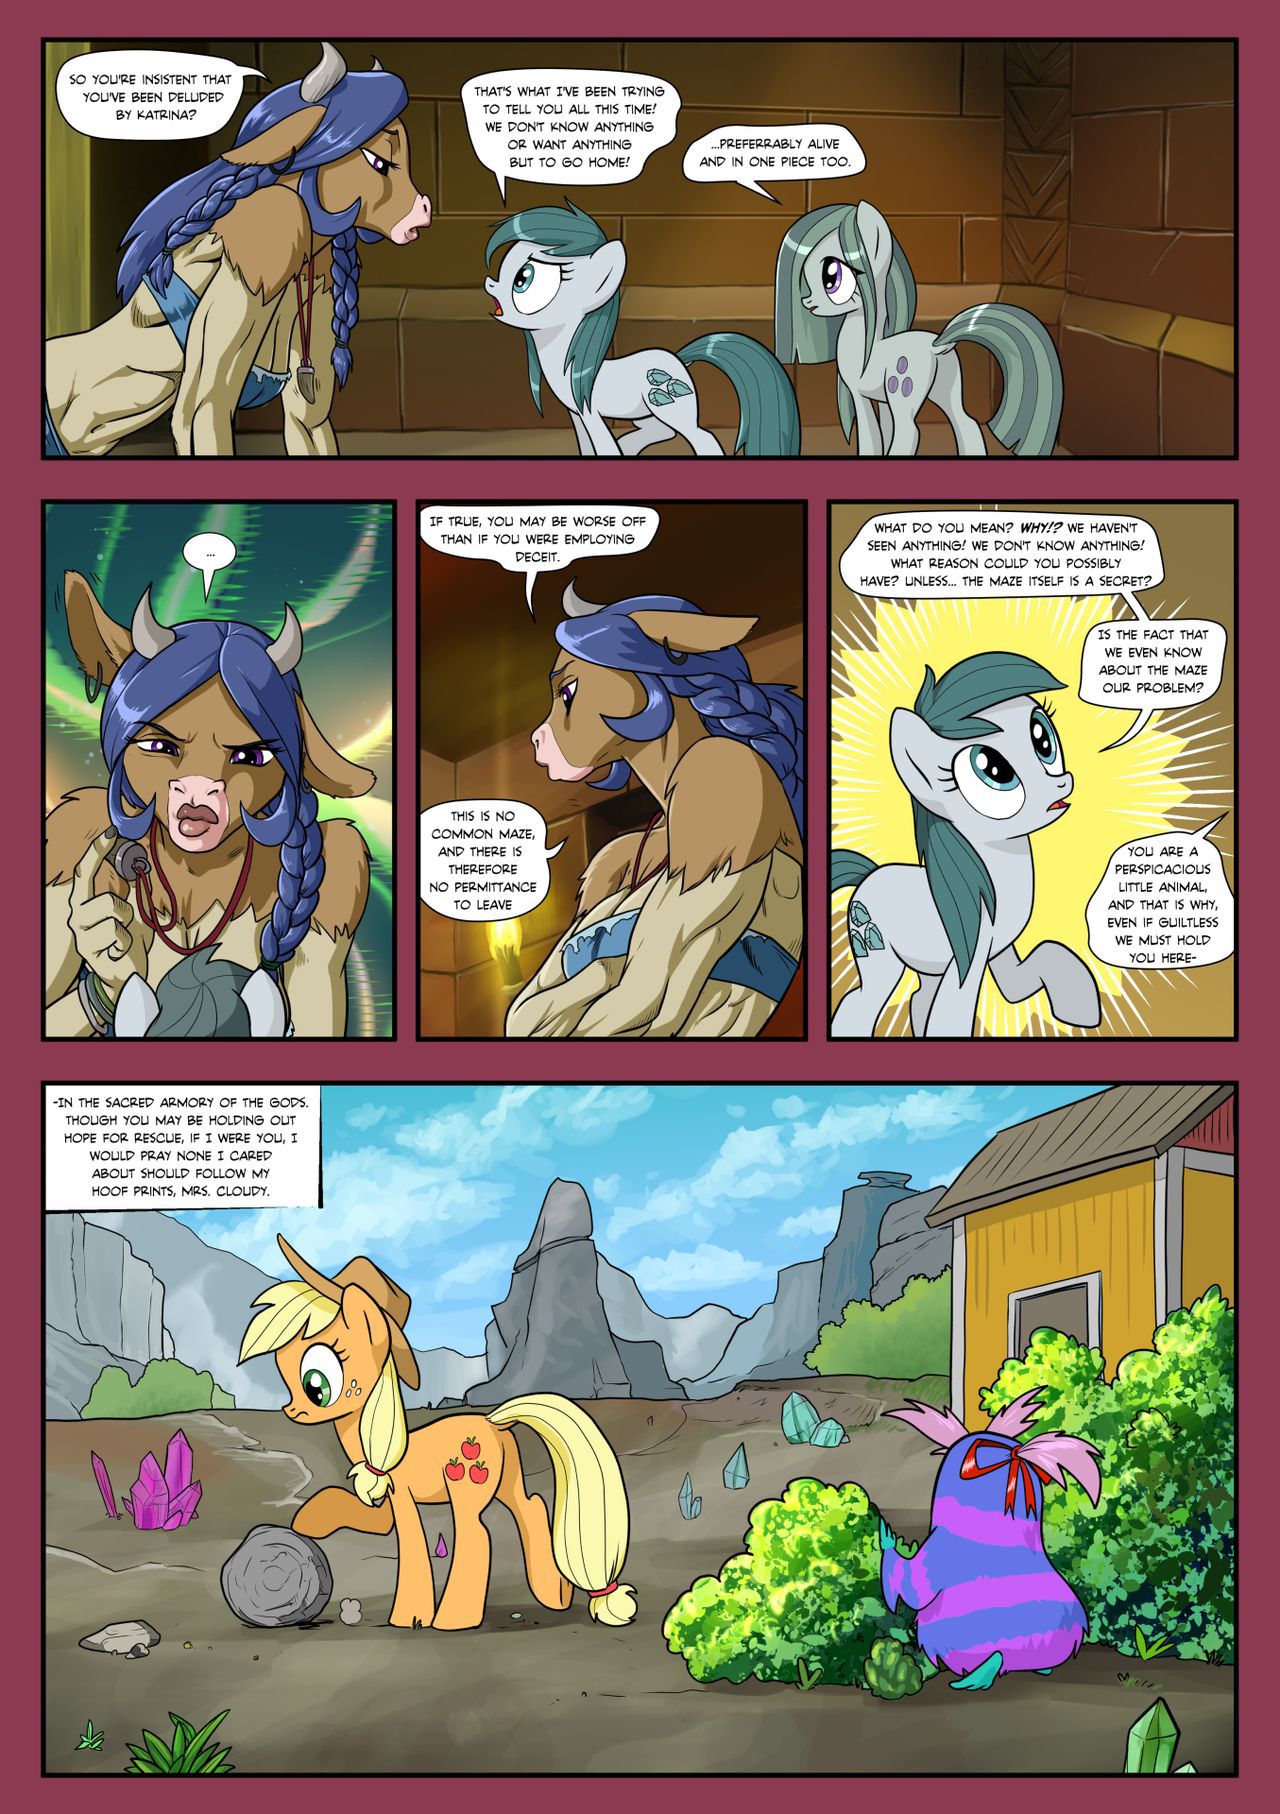 [Pencils] Anon's Pie Adventures (My Little Pony: Friendship is Magic) [In-Progress] 218